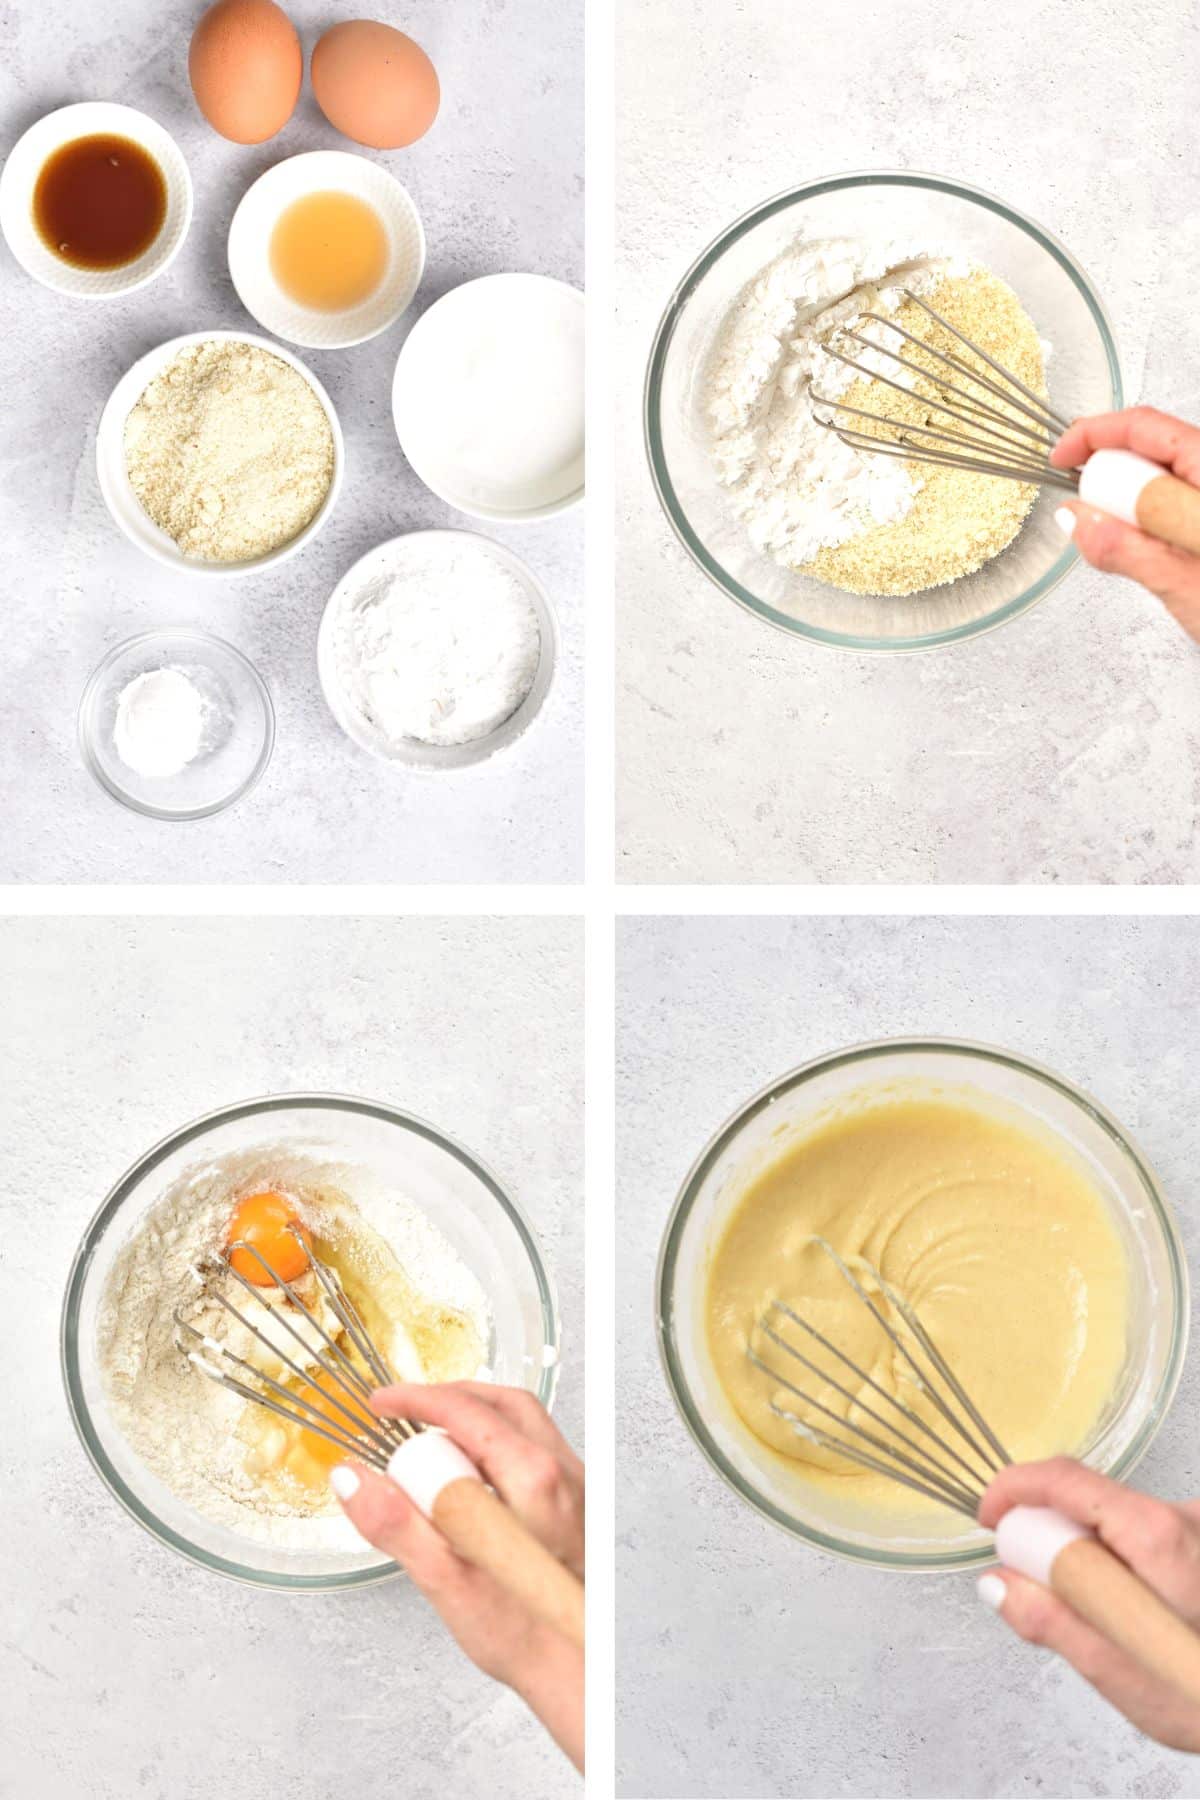 How to make Paleo Pancakes